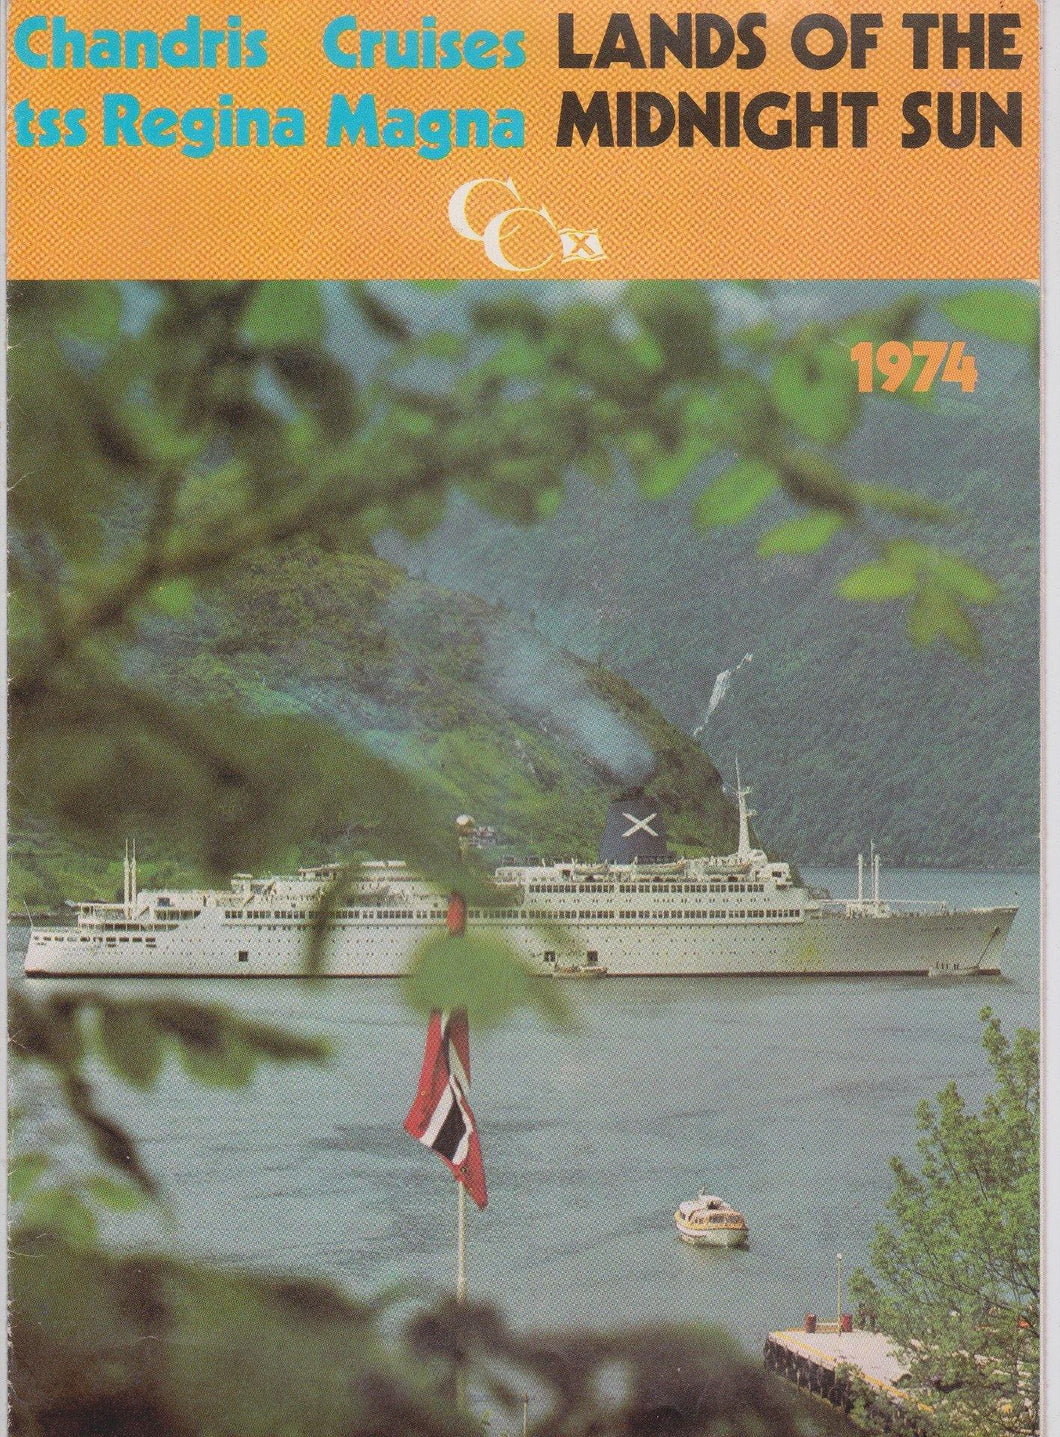 Chandris Cruises tss Regina Magna 1974 Lands of the Midnight Sun Brochure - TulipStuff